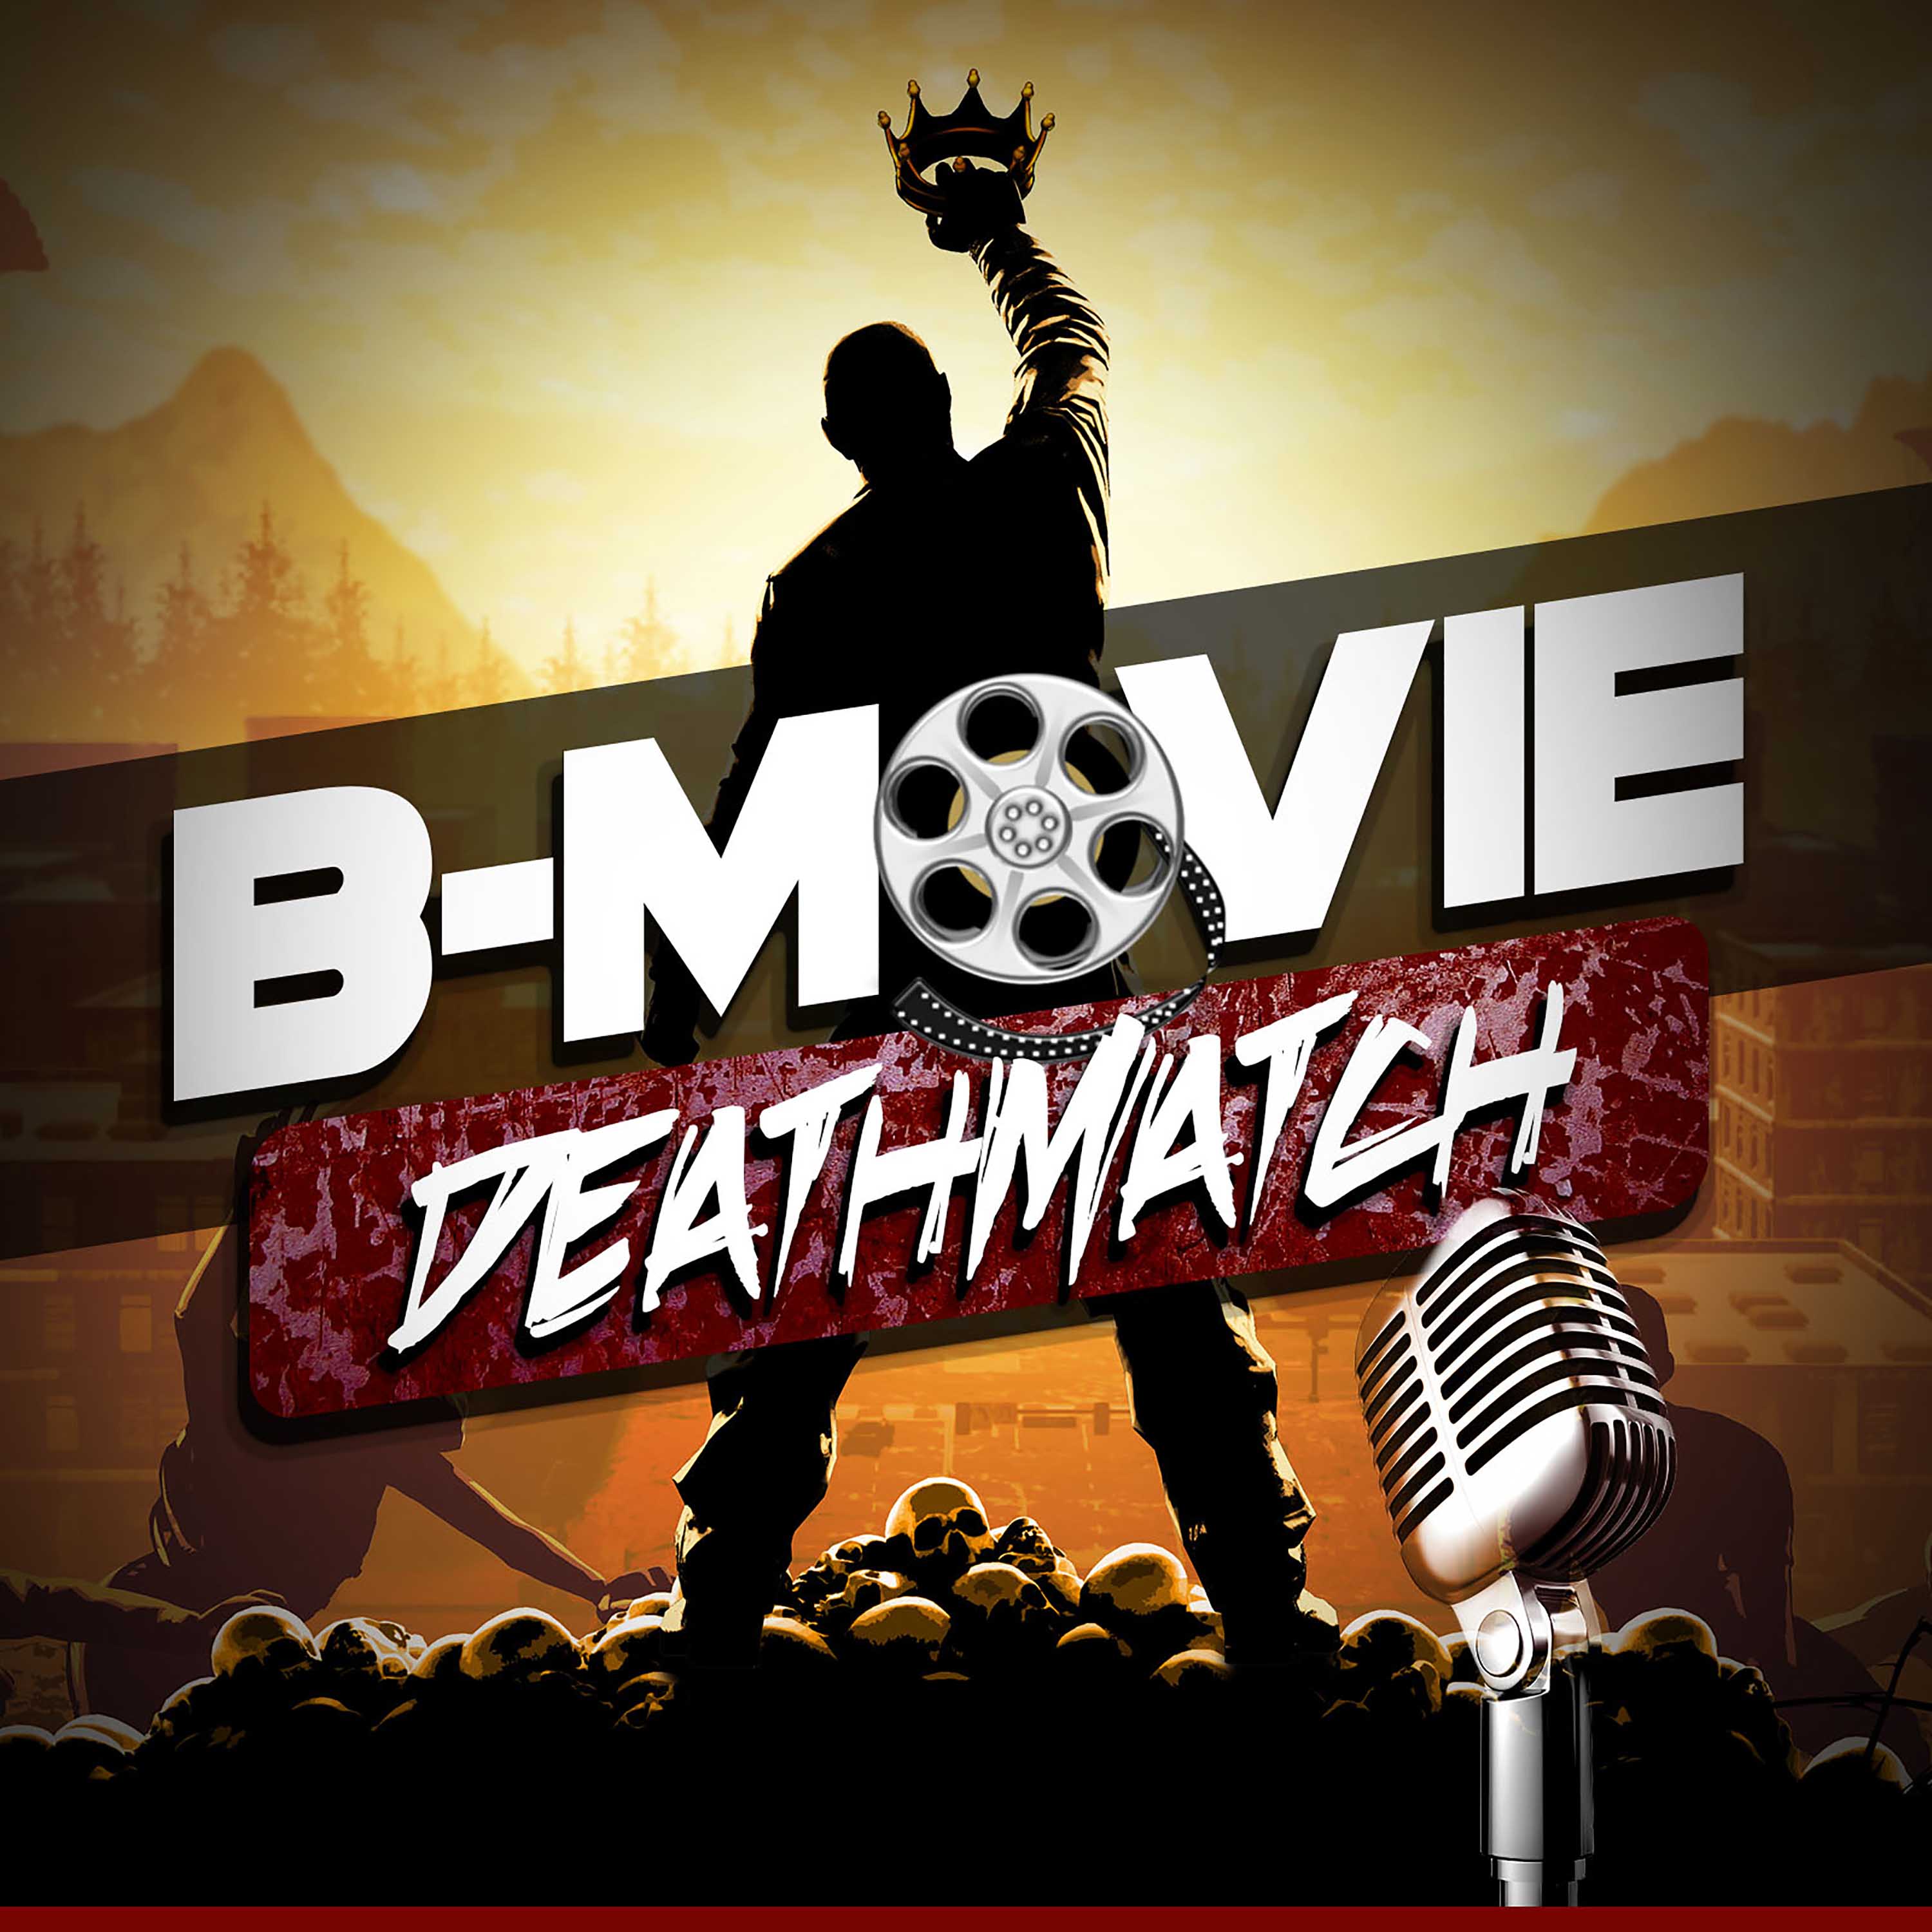 B-Movie Death Match